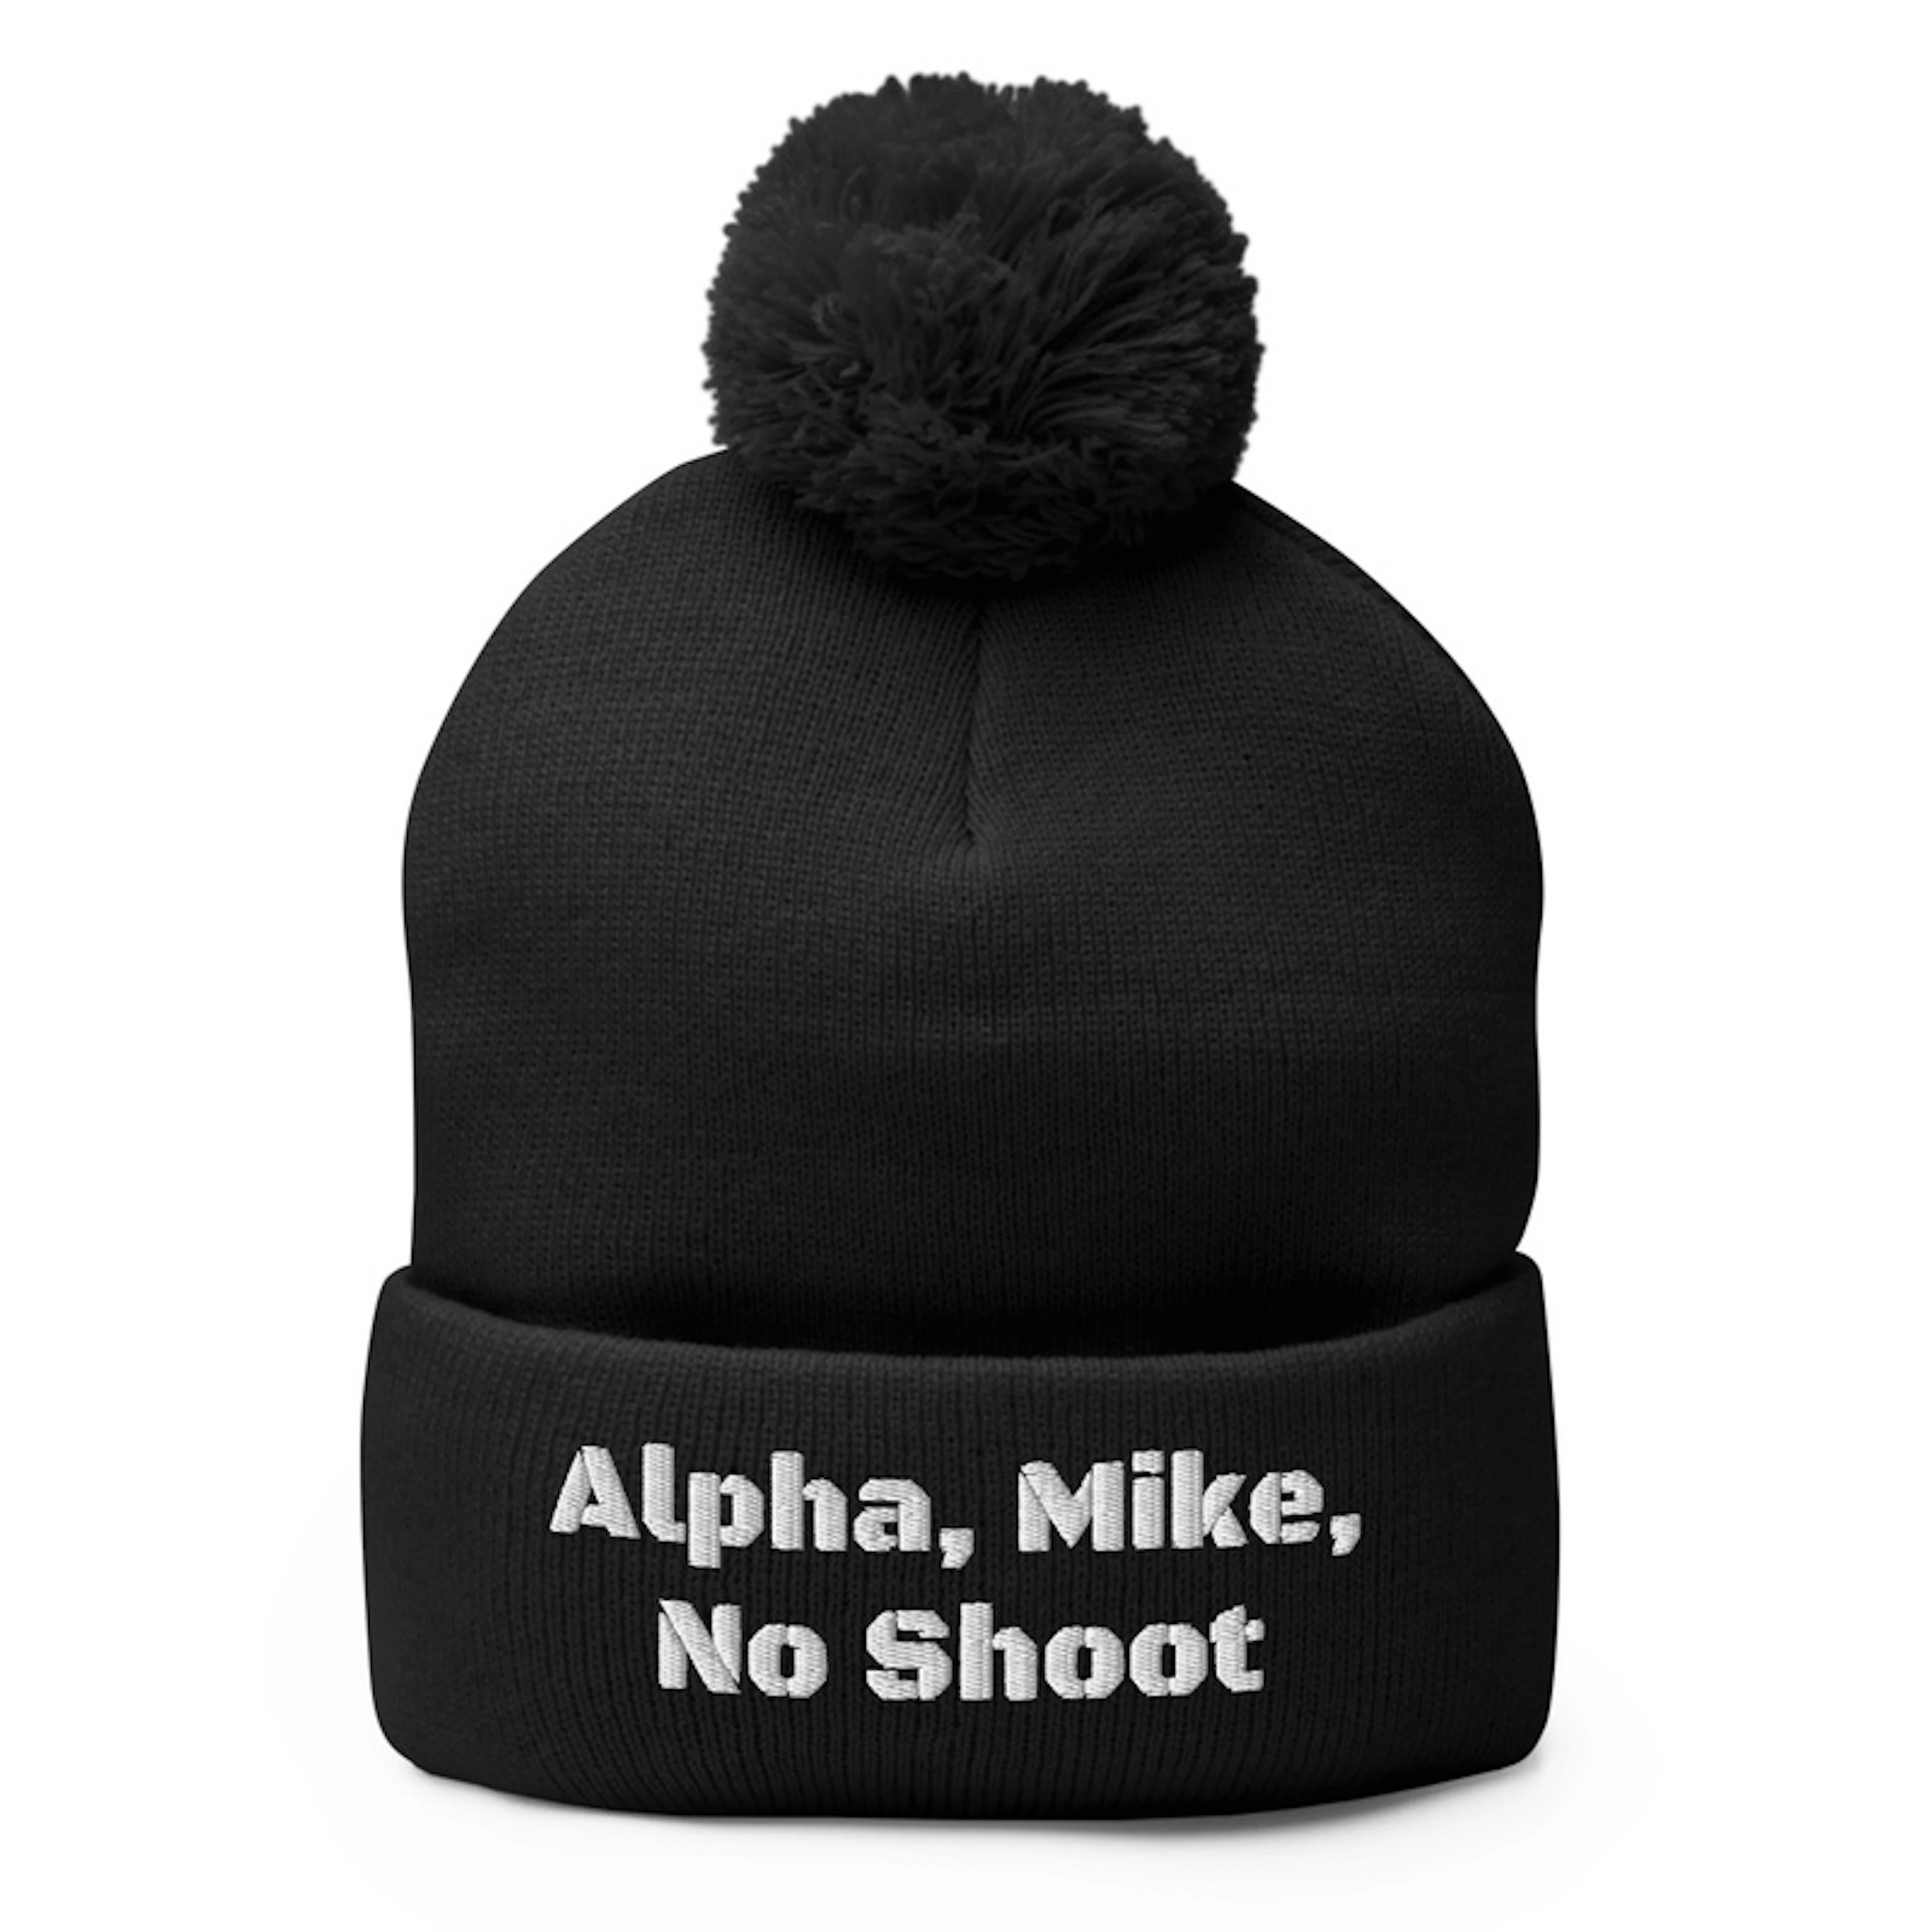 Alpha, Mike, No Shoot